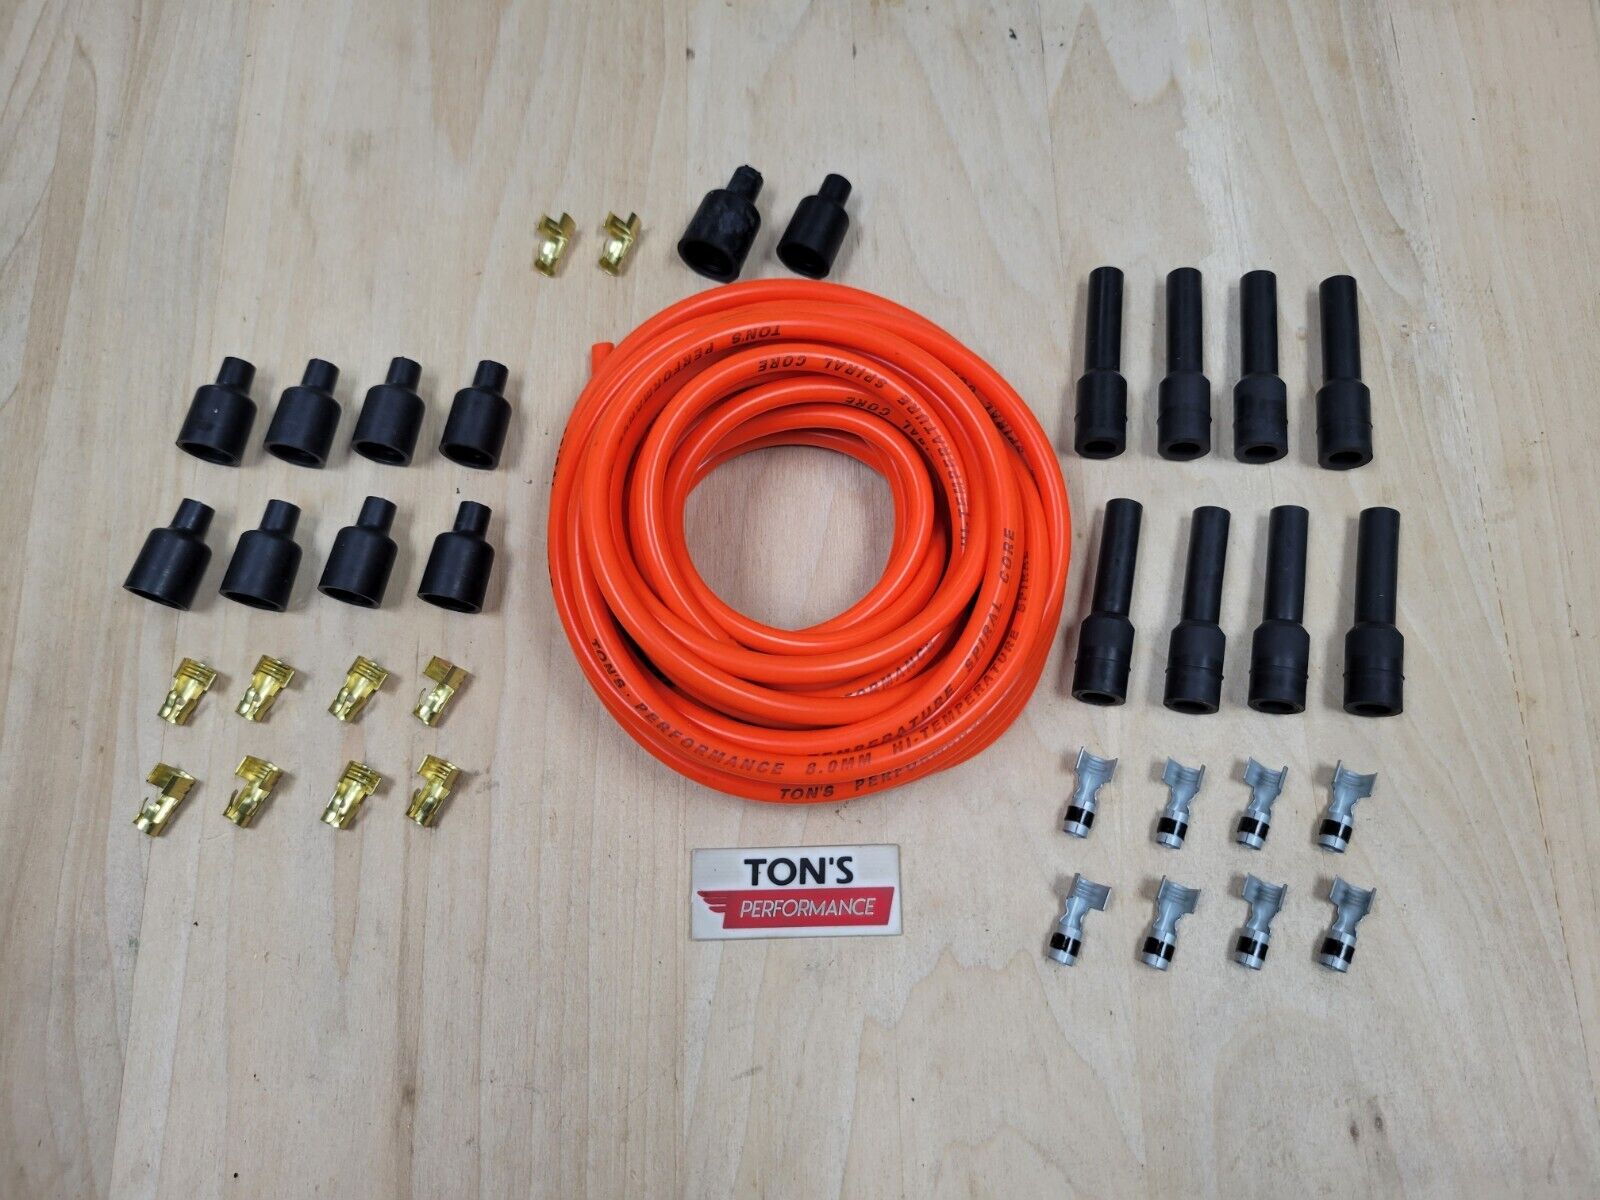 Ton's 8mm Universal Silicone 8mm Spark Plug Wire Kit Set DIY Wires v8 Orange